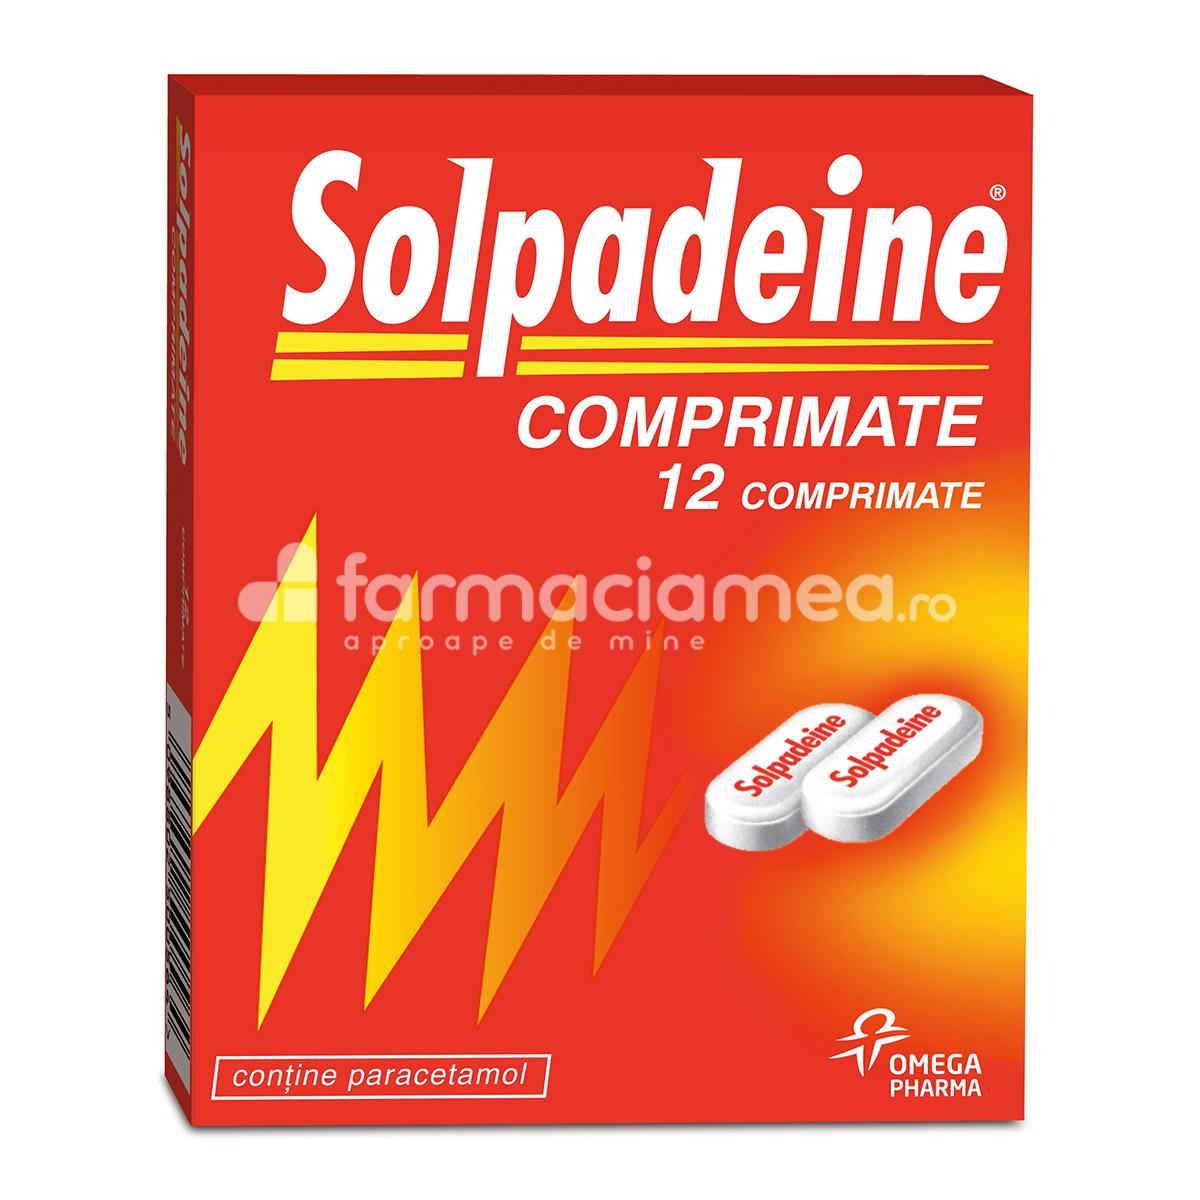 Durere OTC - Solpadeine x 12 comprimate, farmaciamea.ro